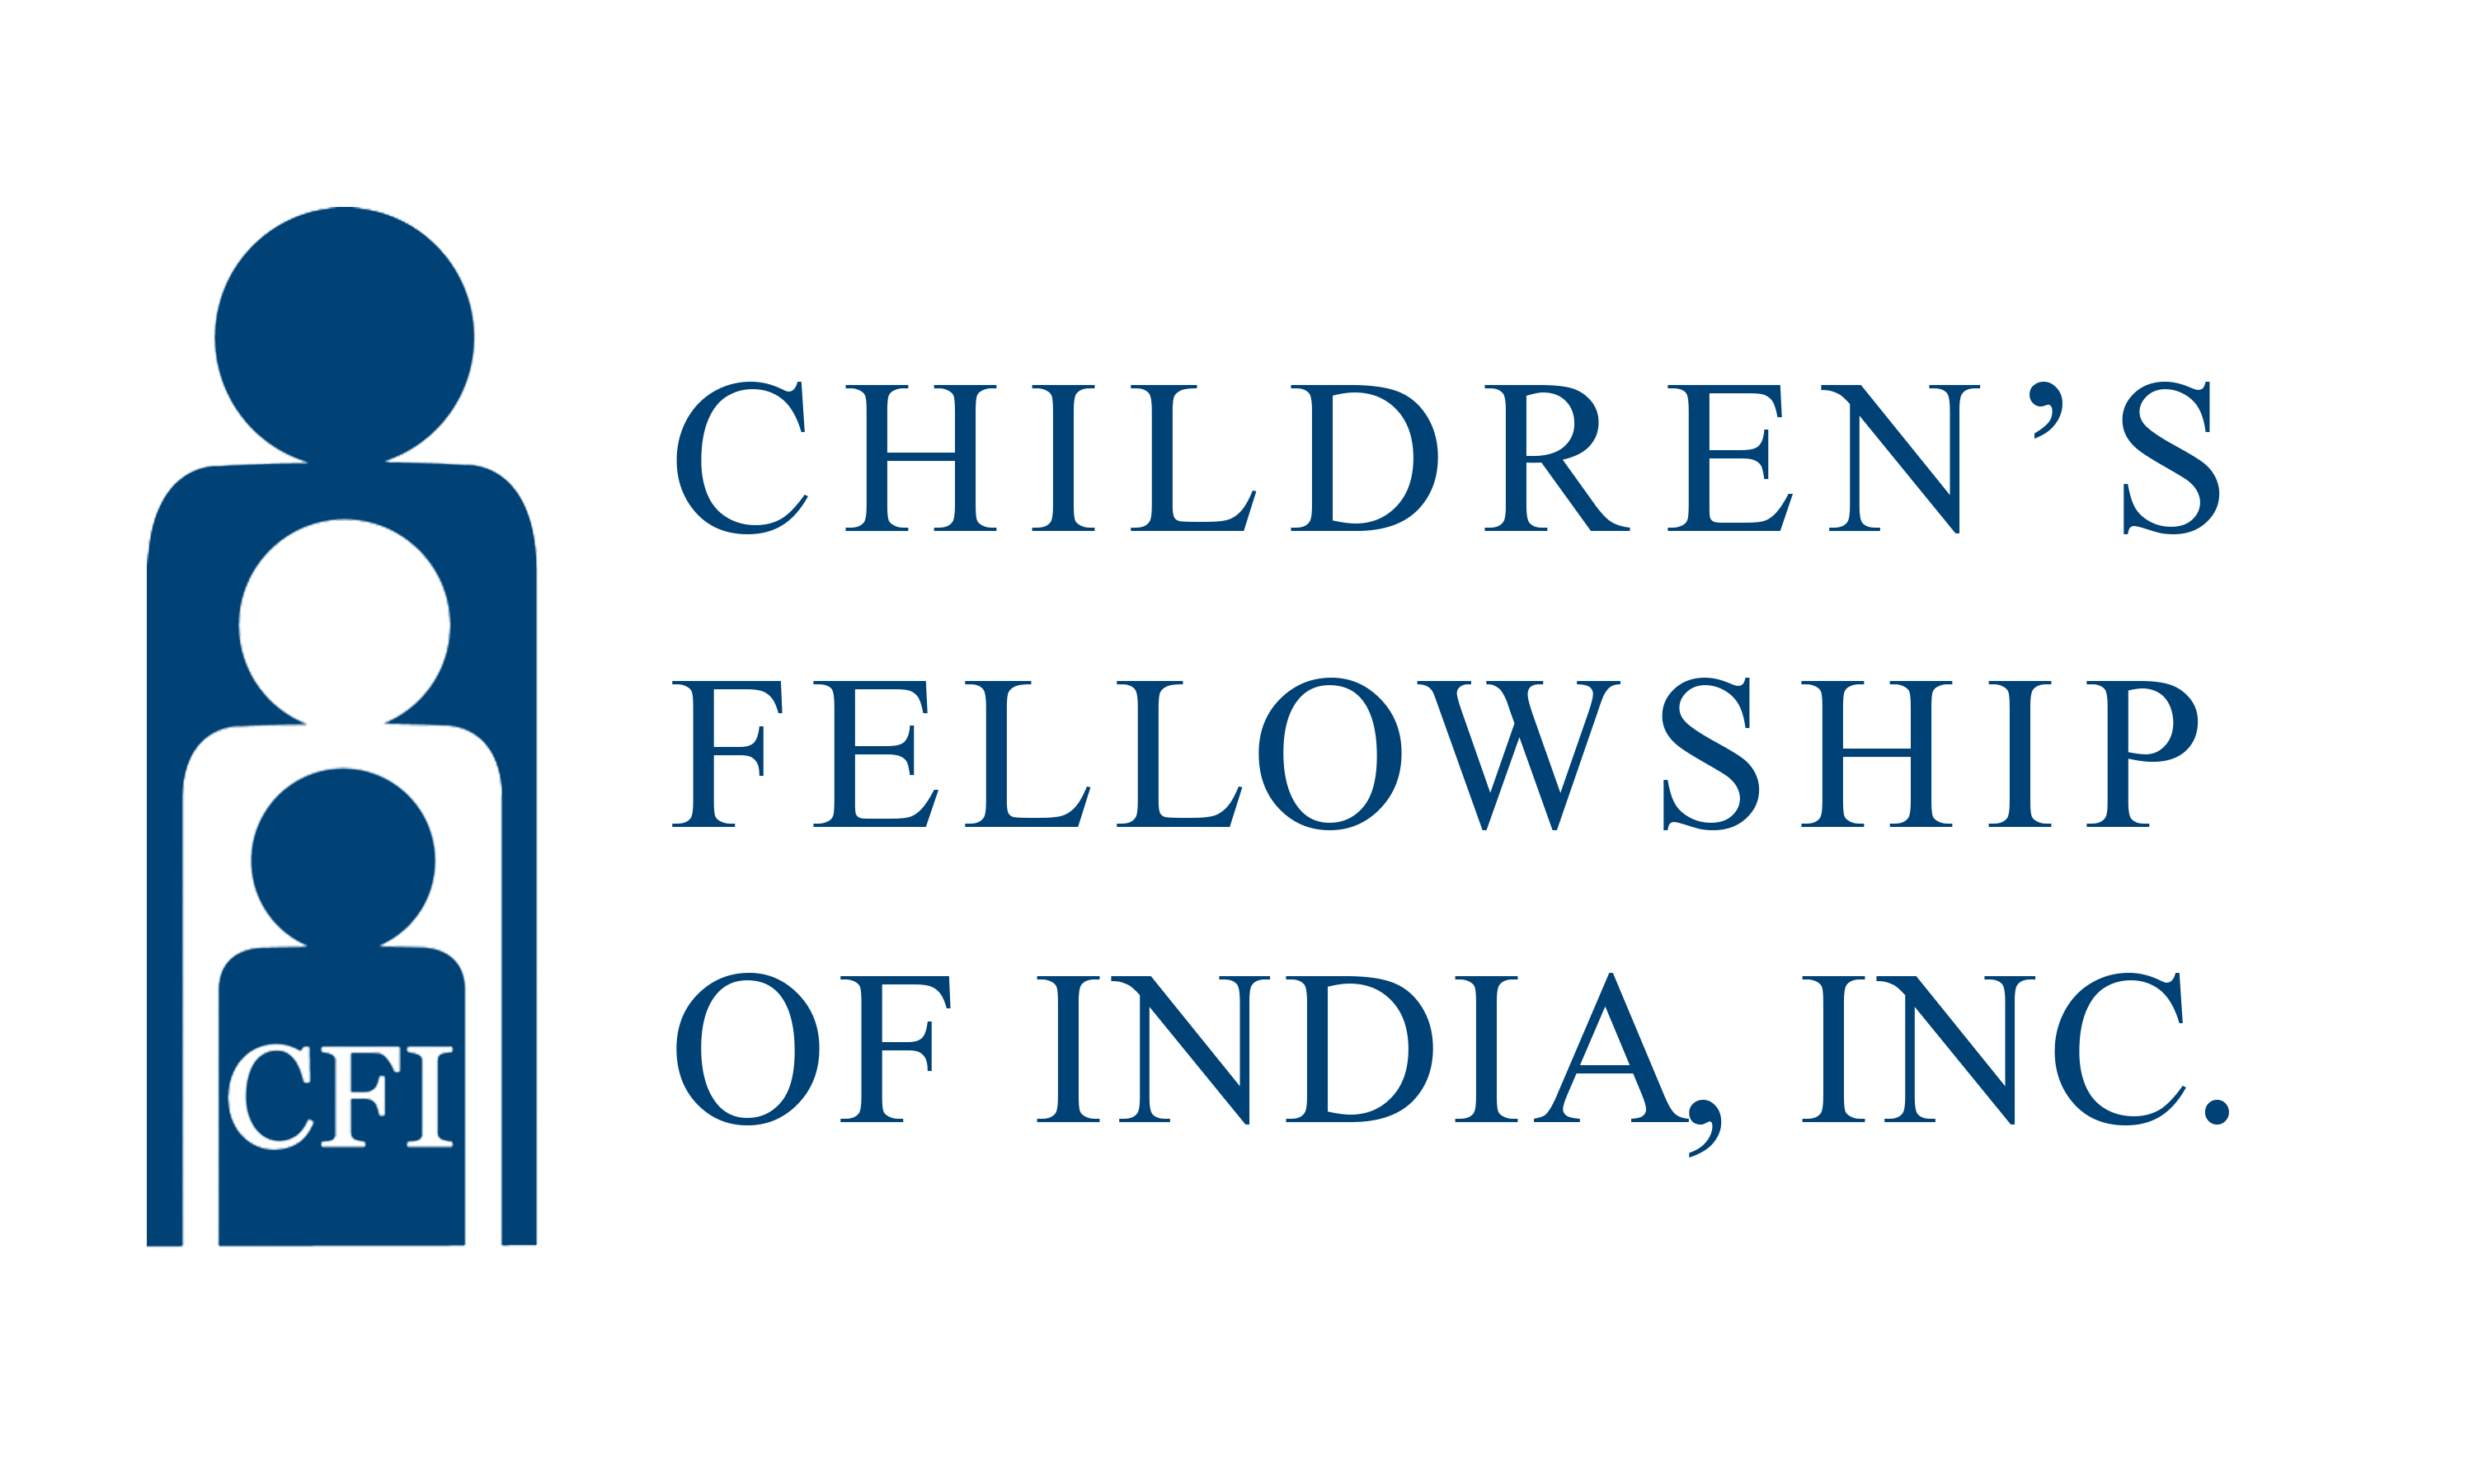 Children's Fellowship of India logo